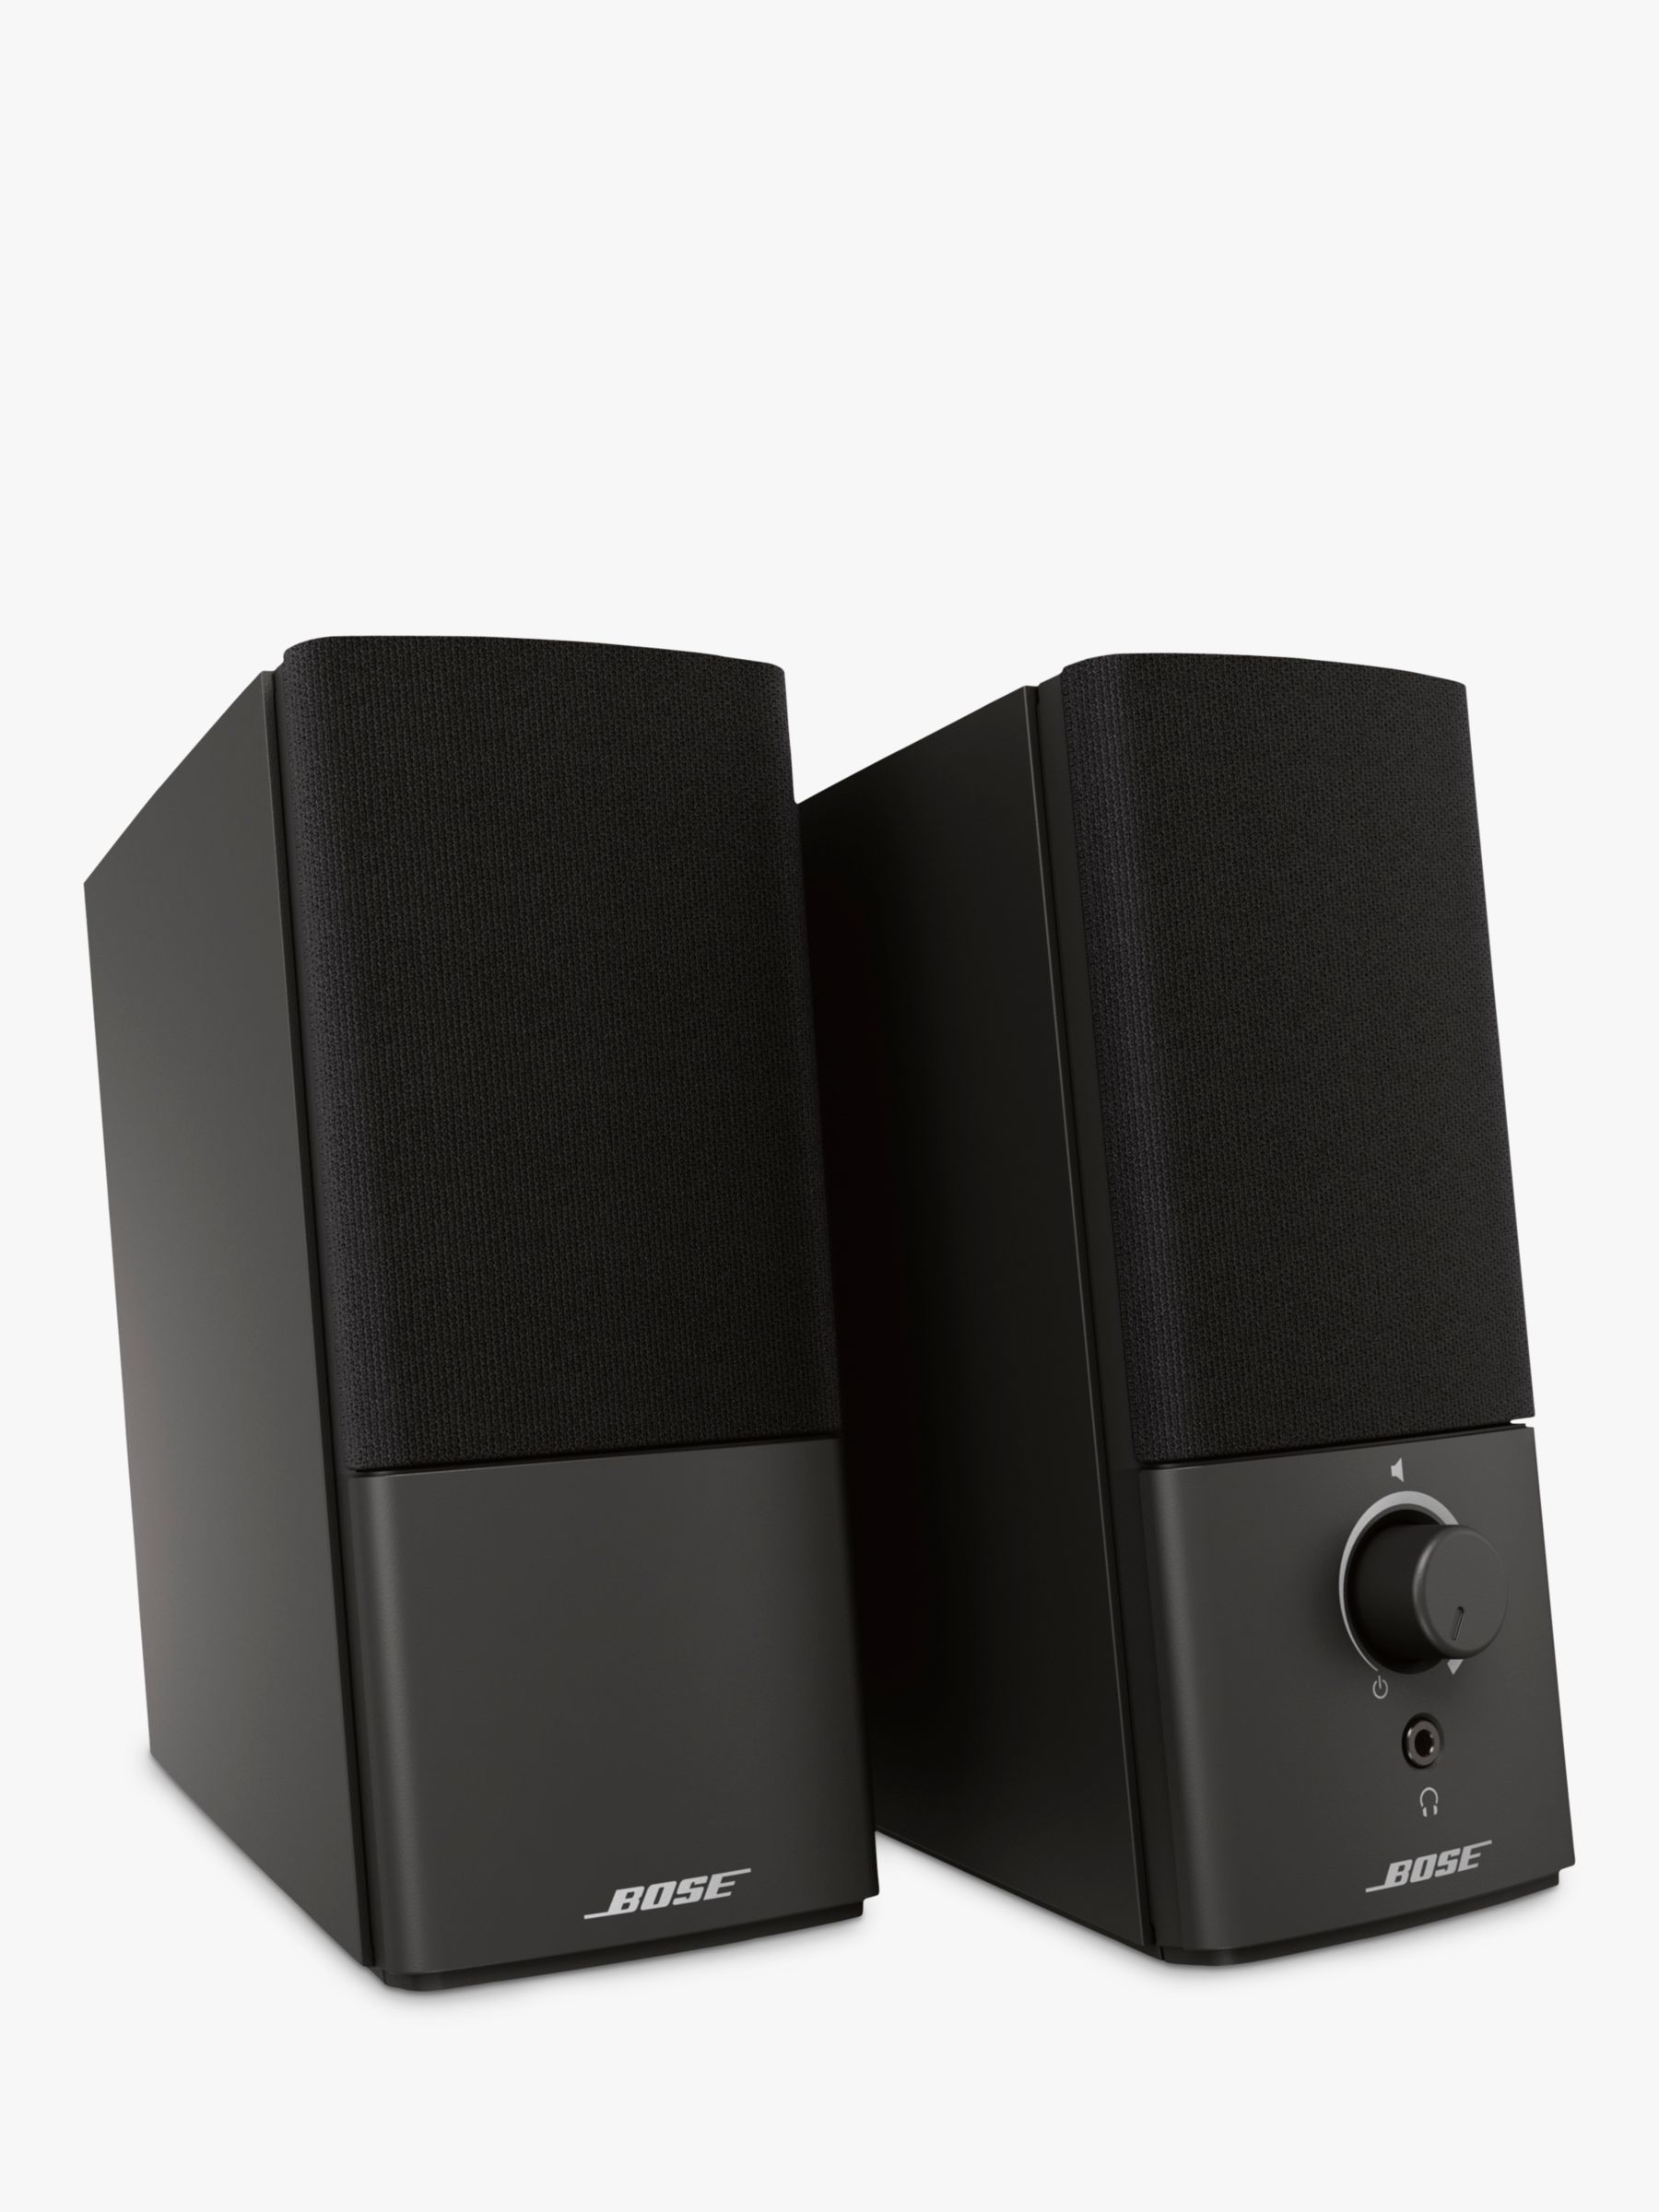 Bose Companion 2 Multimedia Speaker System, Series III